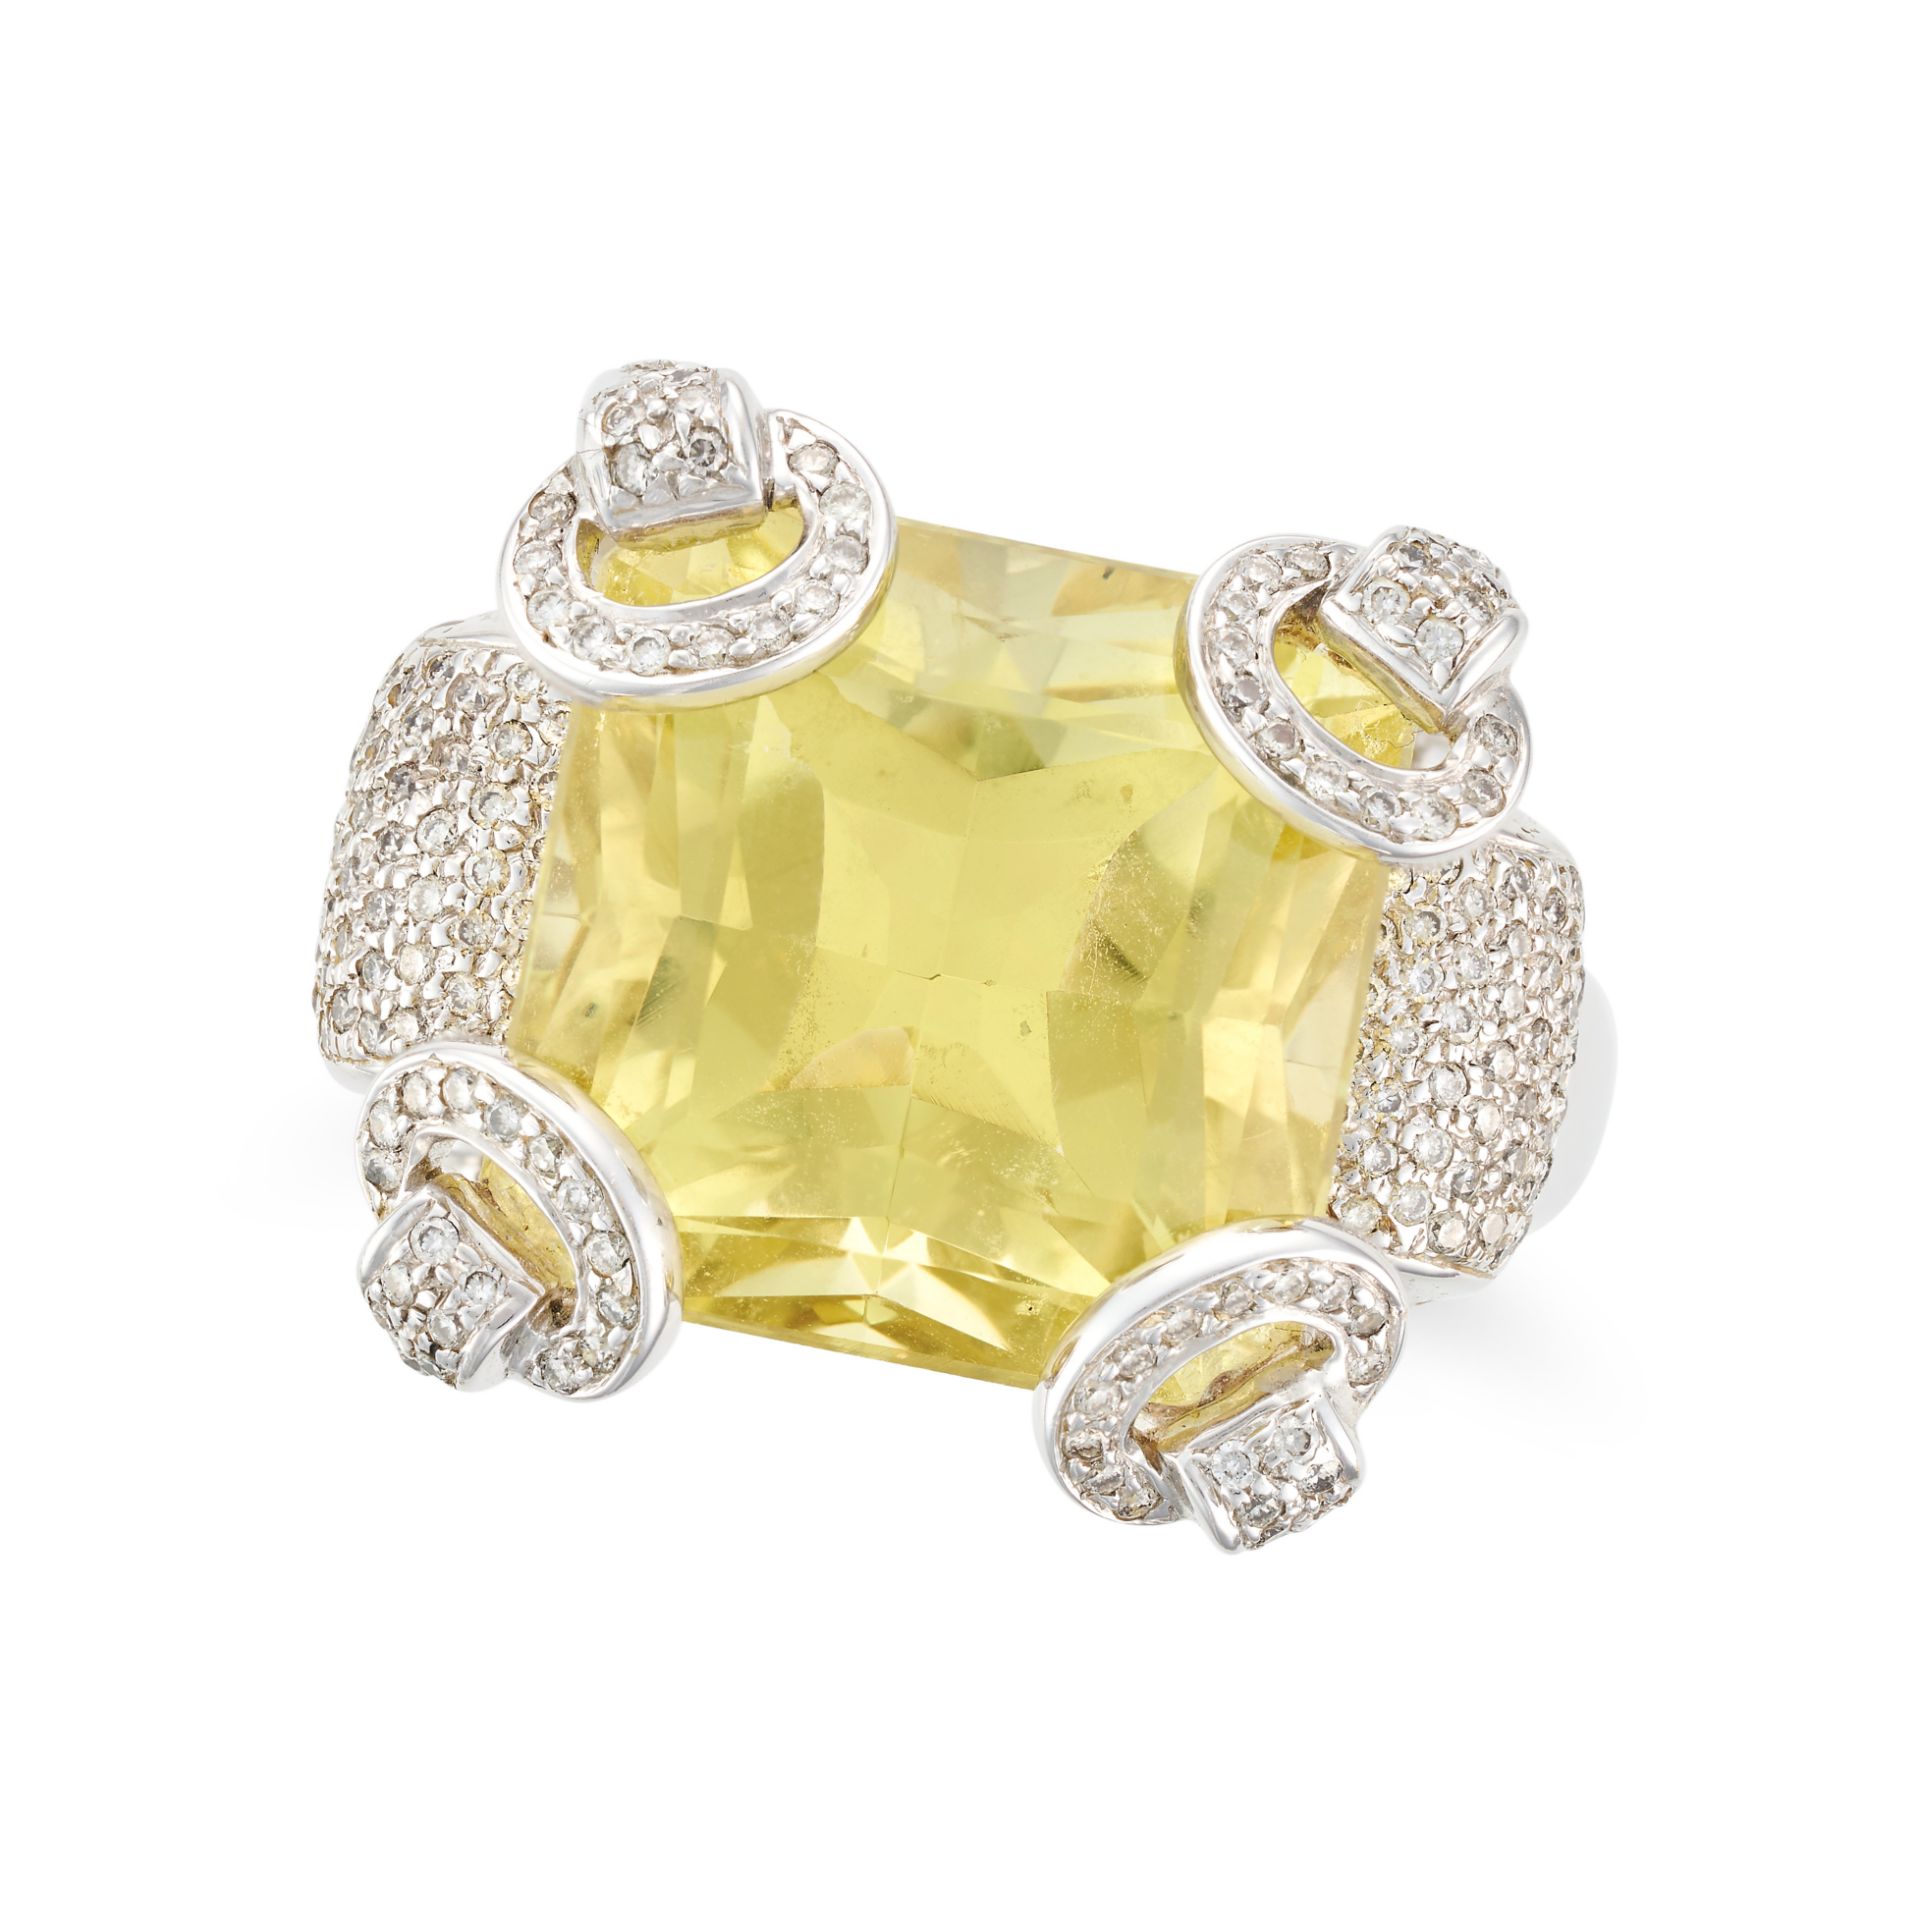 A LEMON QUARTZ AND DIAMOND RING set with an octagonal step cut lemon quartz, accented by round br...